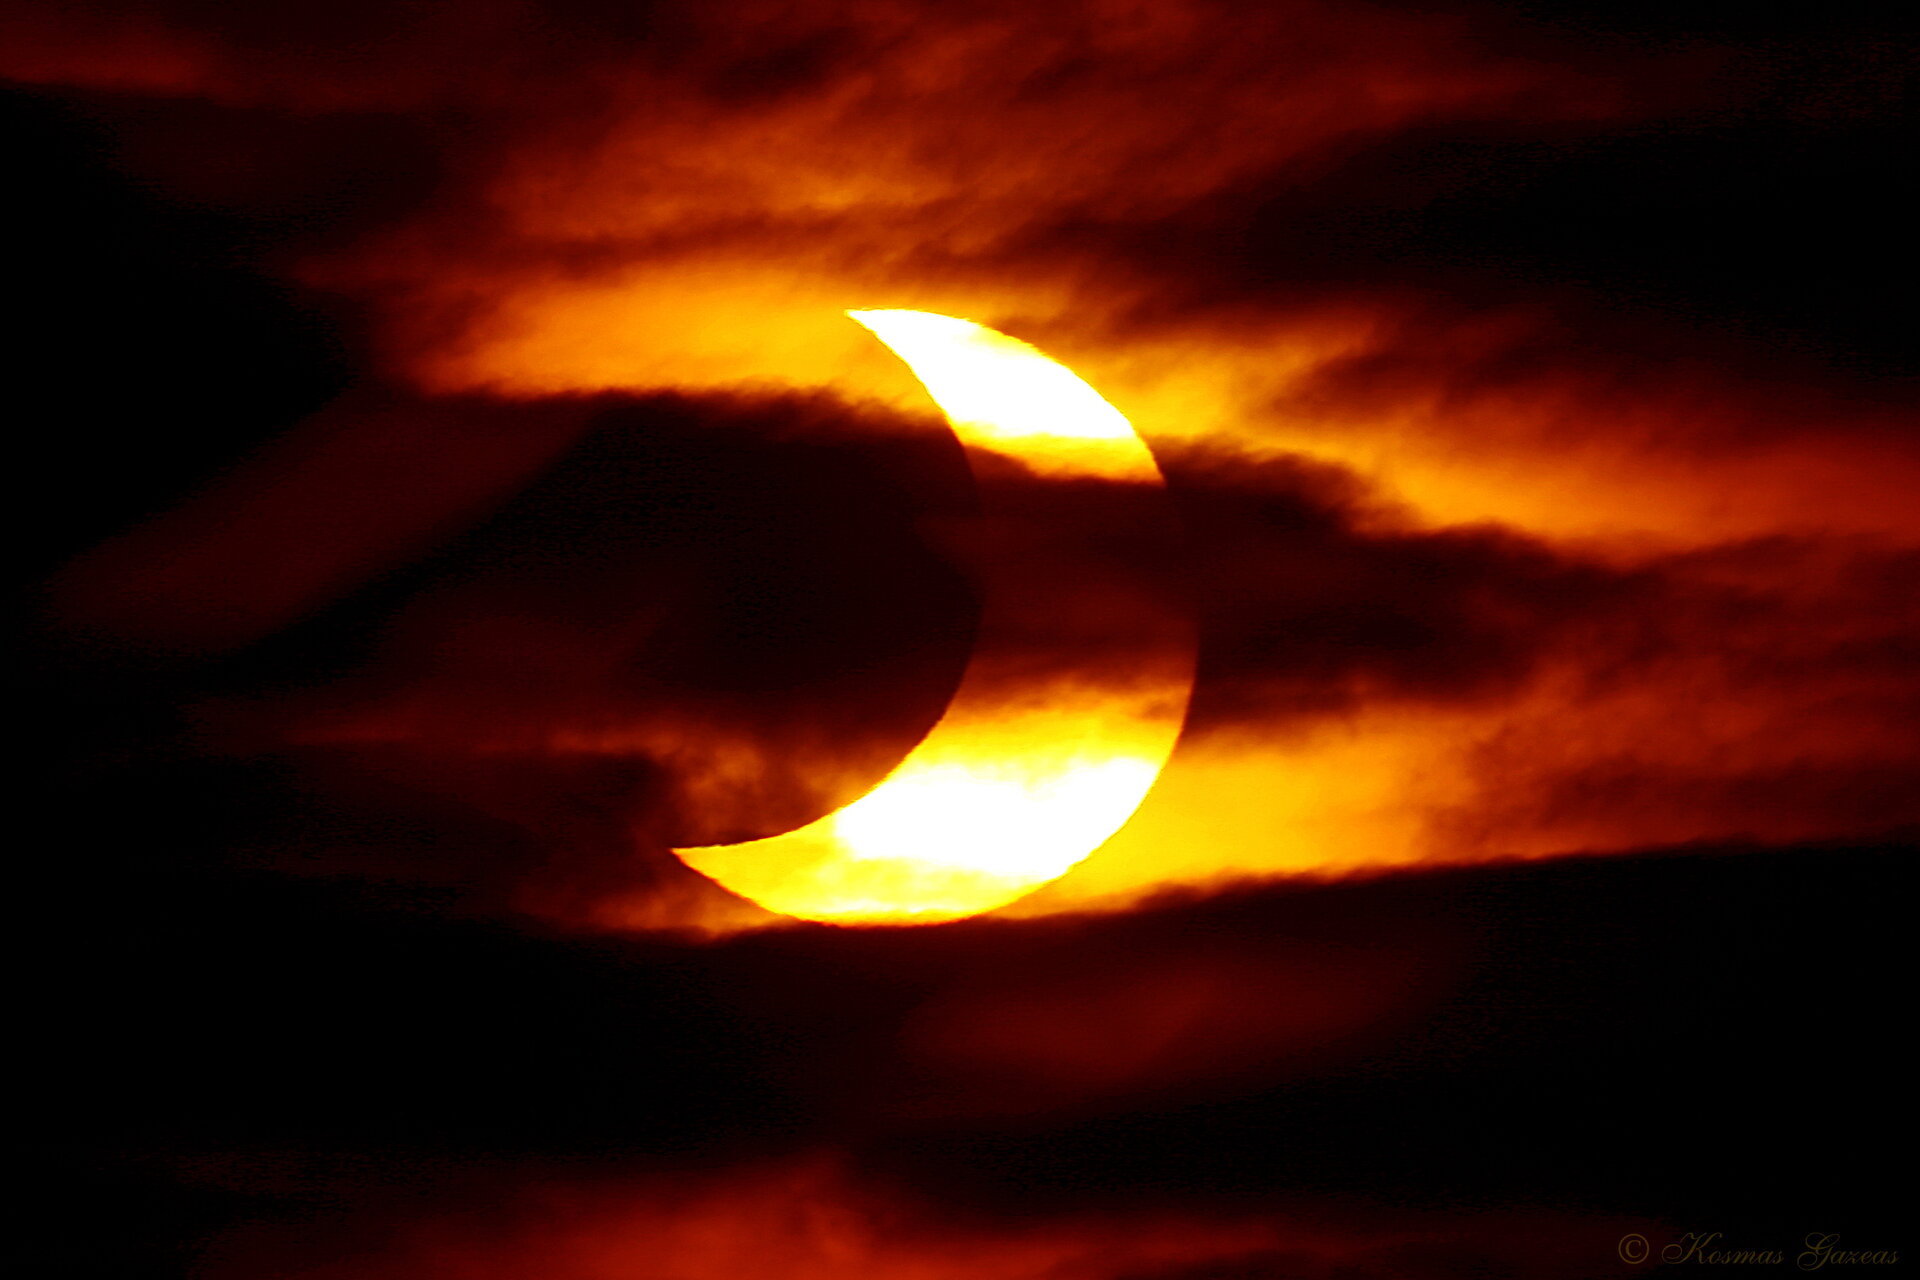 Eclipse seen from ESTEC